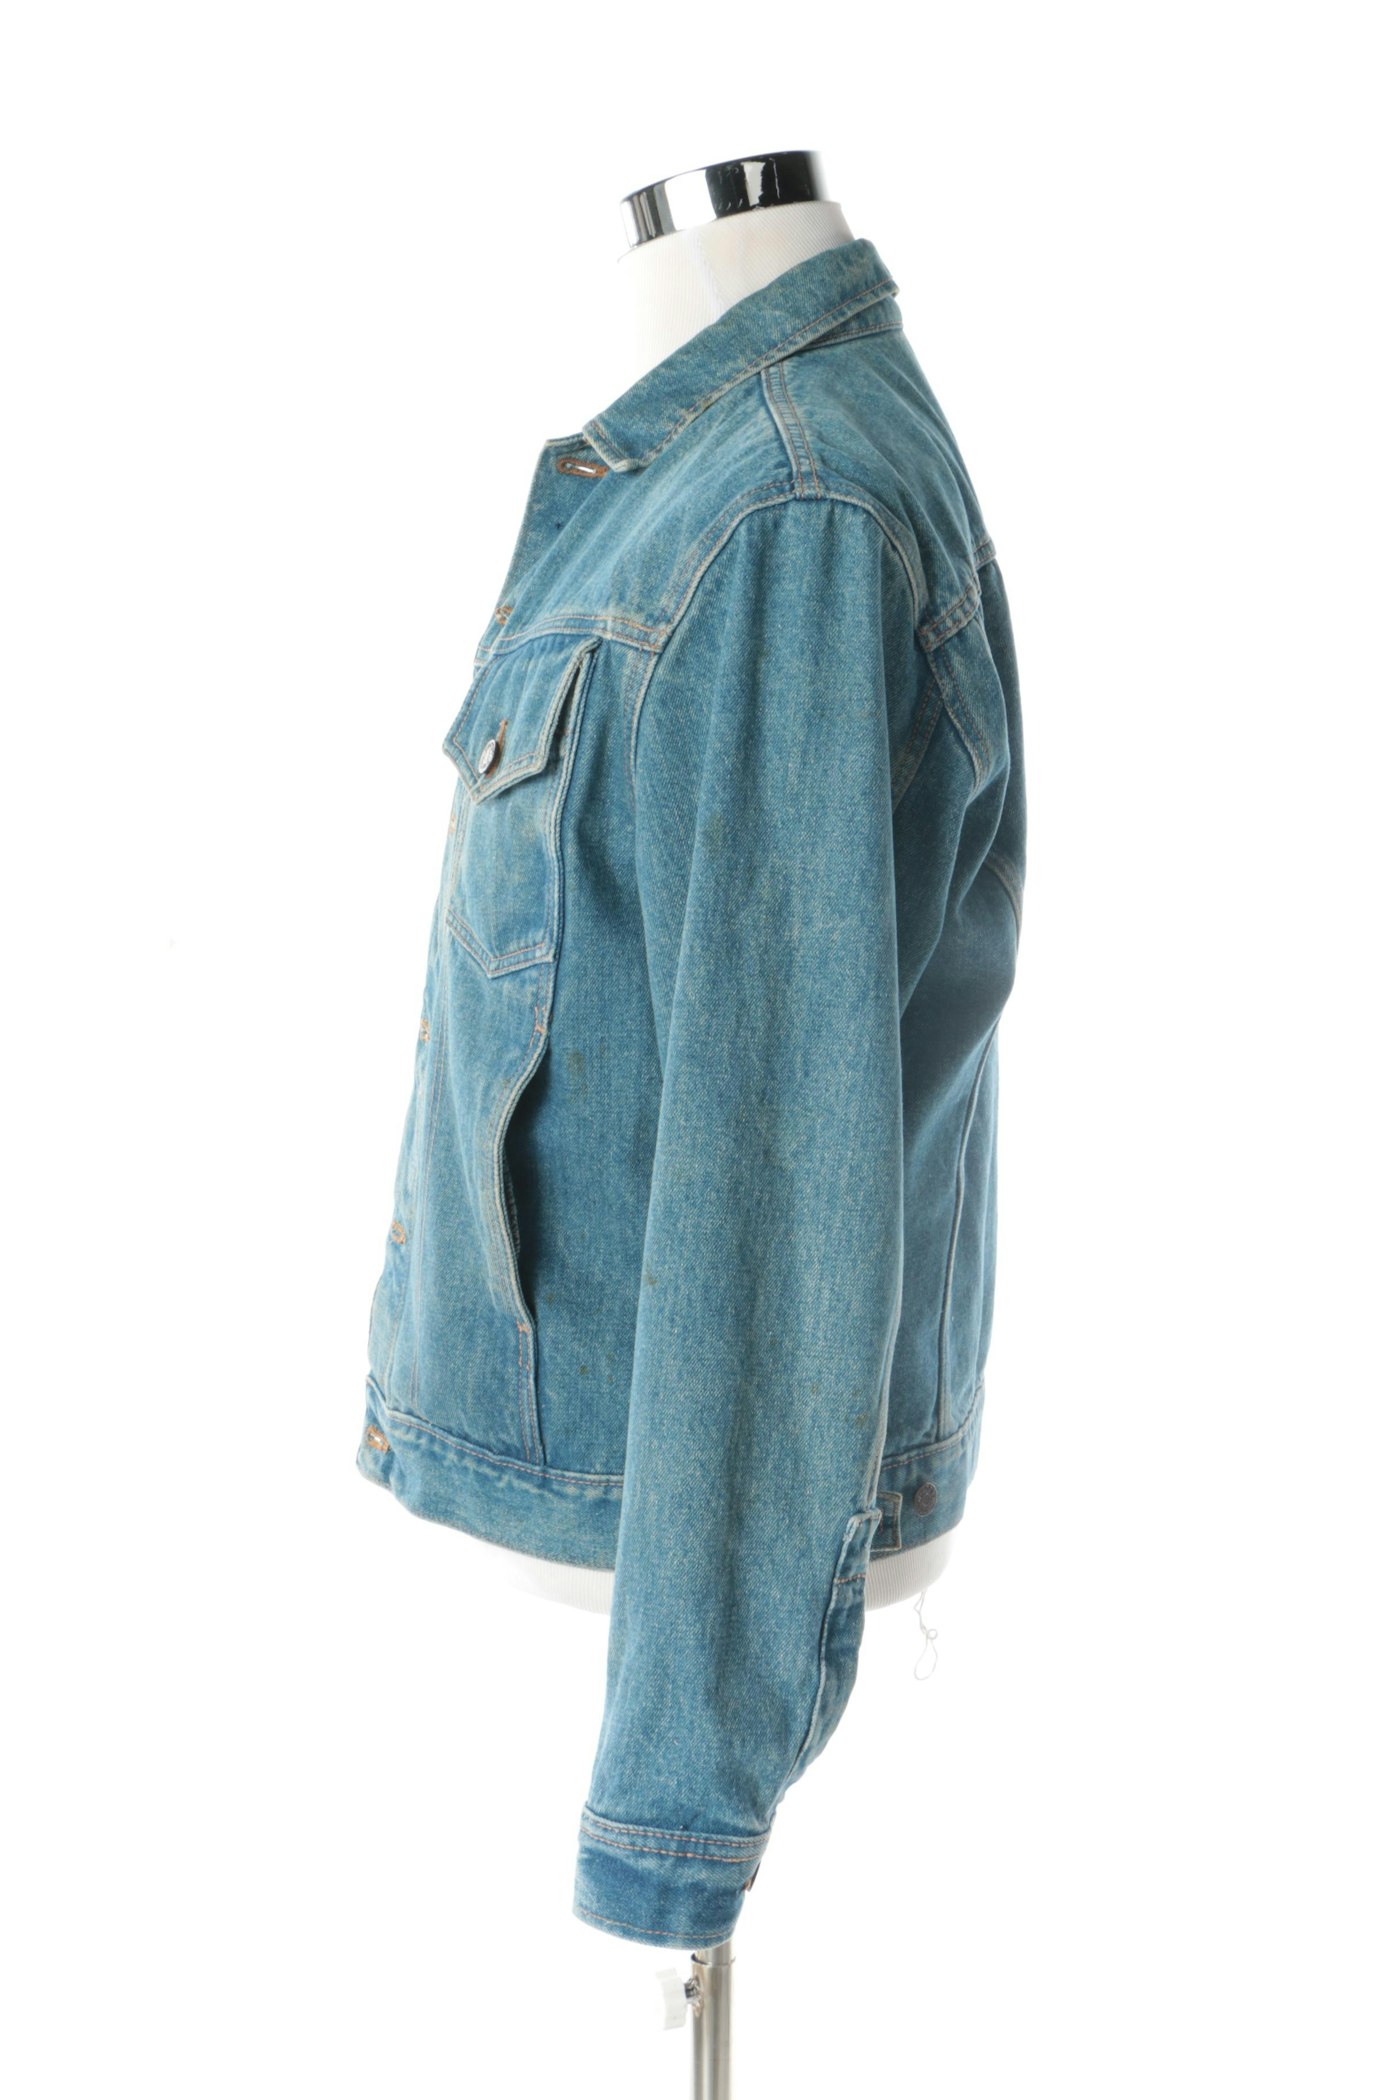 Men's Vintage ACA Joe 670 Stone-Washed Denim Jacket | EBTH